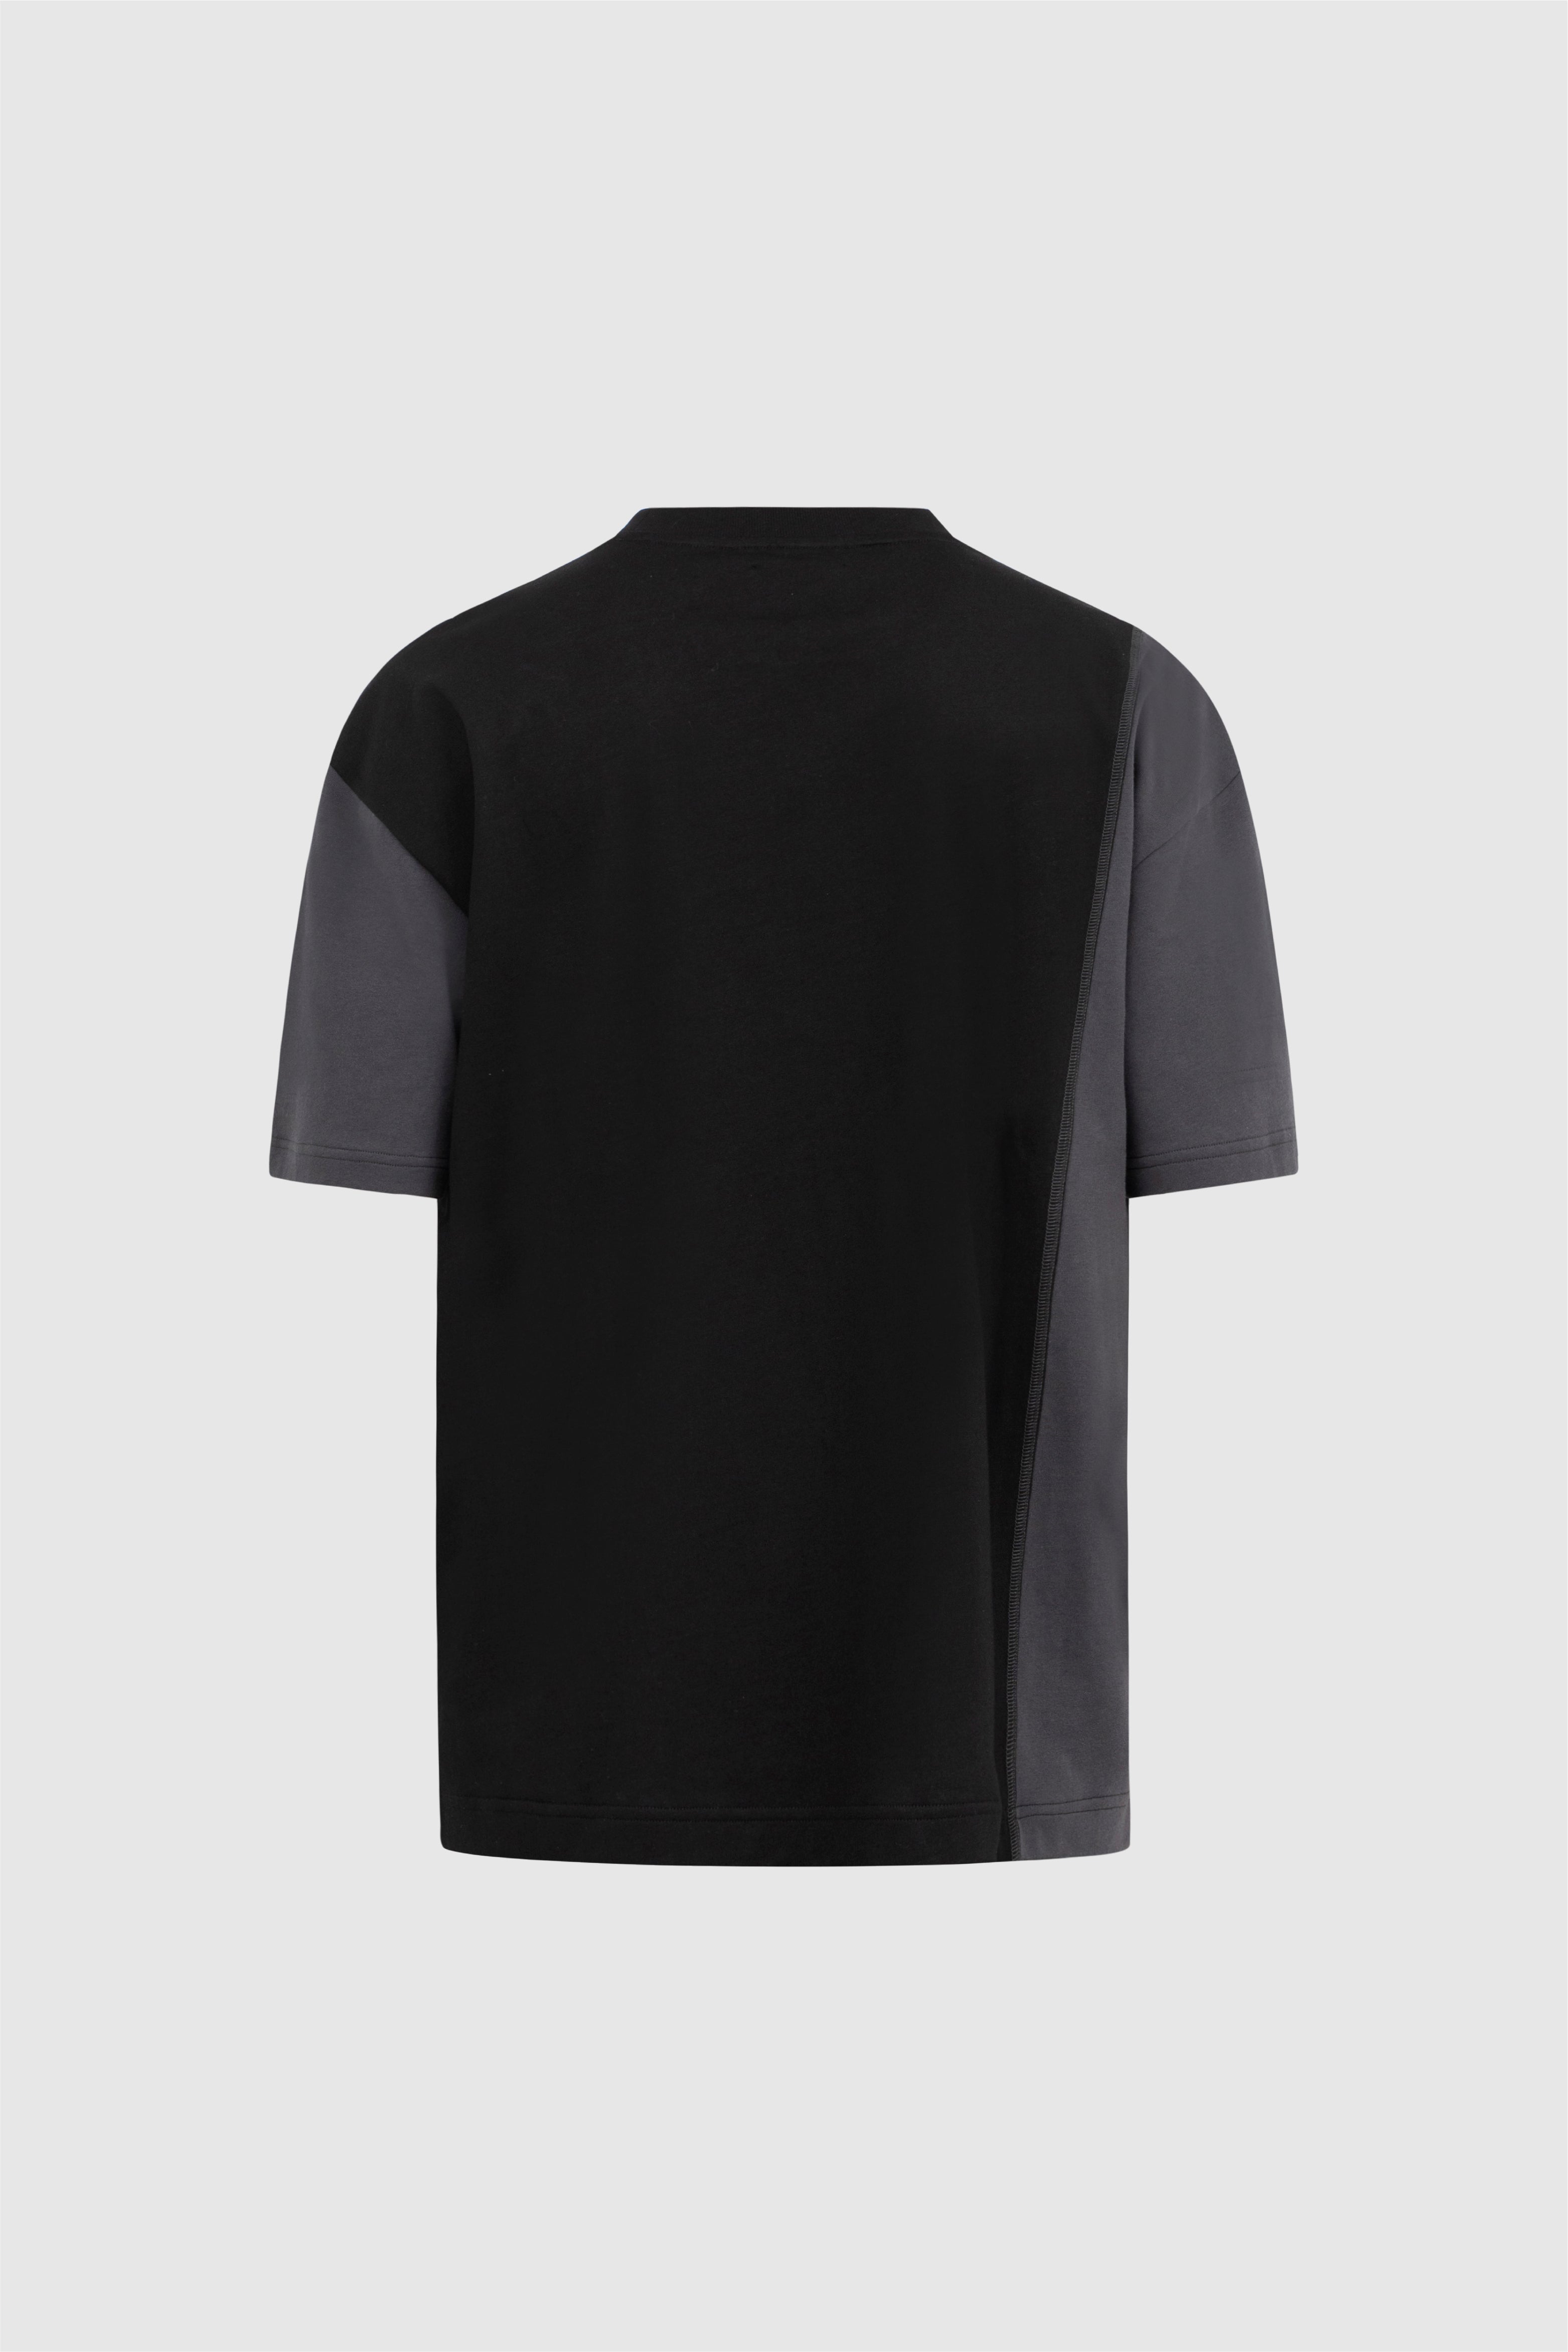 Selectshop FRAME - FENG CHEN WANG Stitching Deconstructed T-Shirt T-Shirts Concept Store Dubai